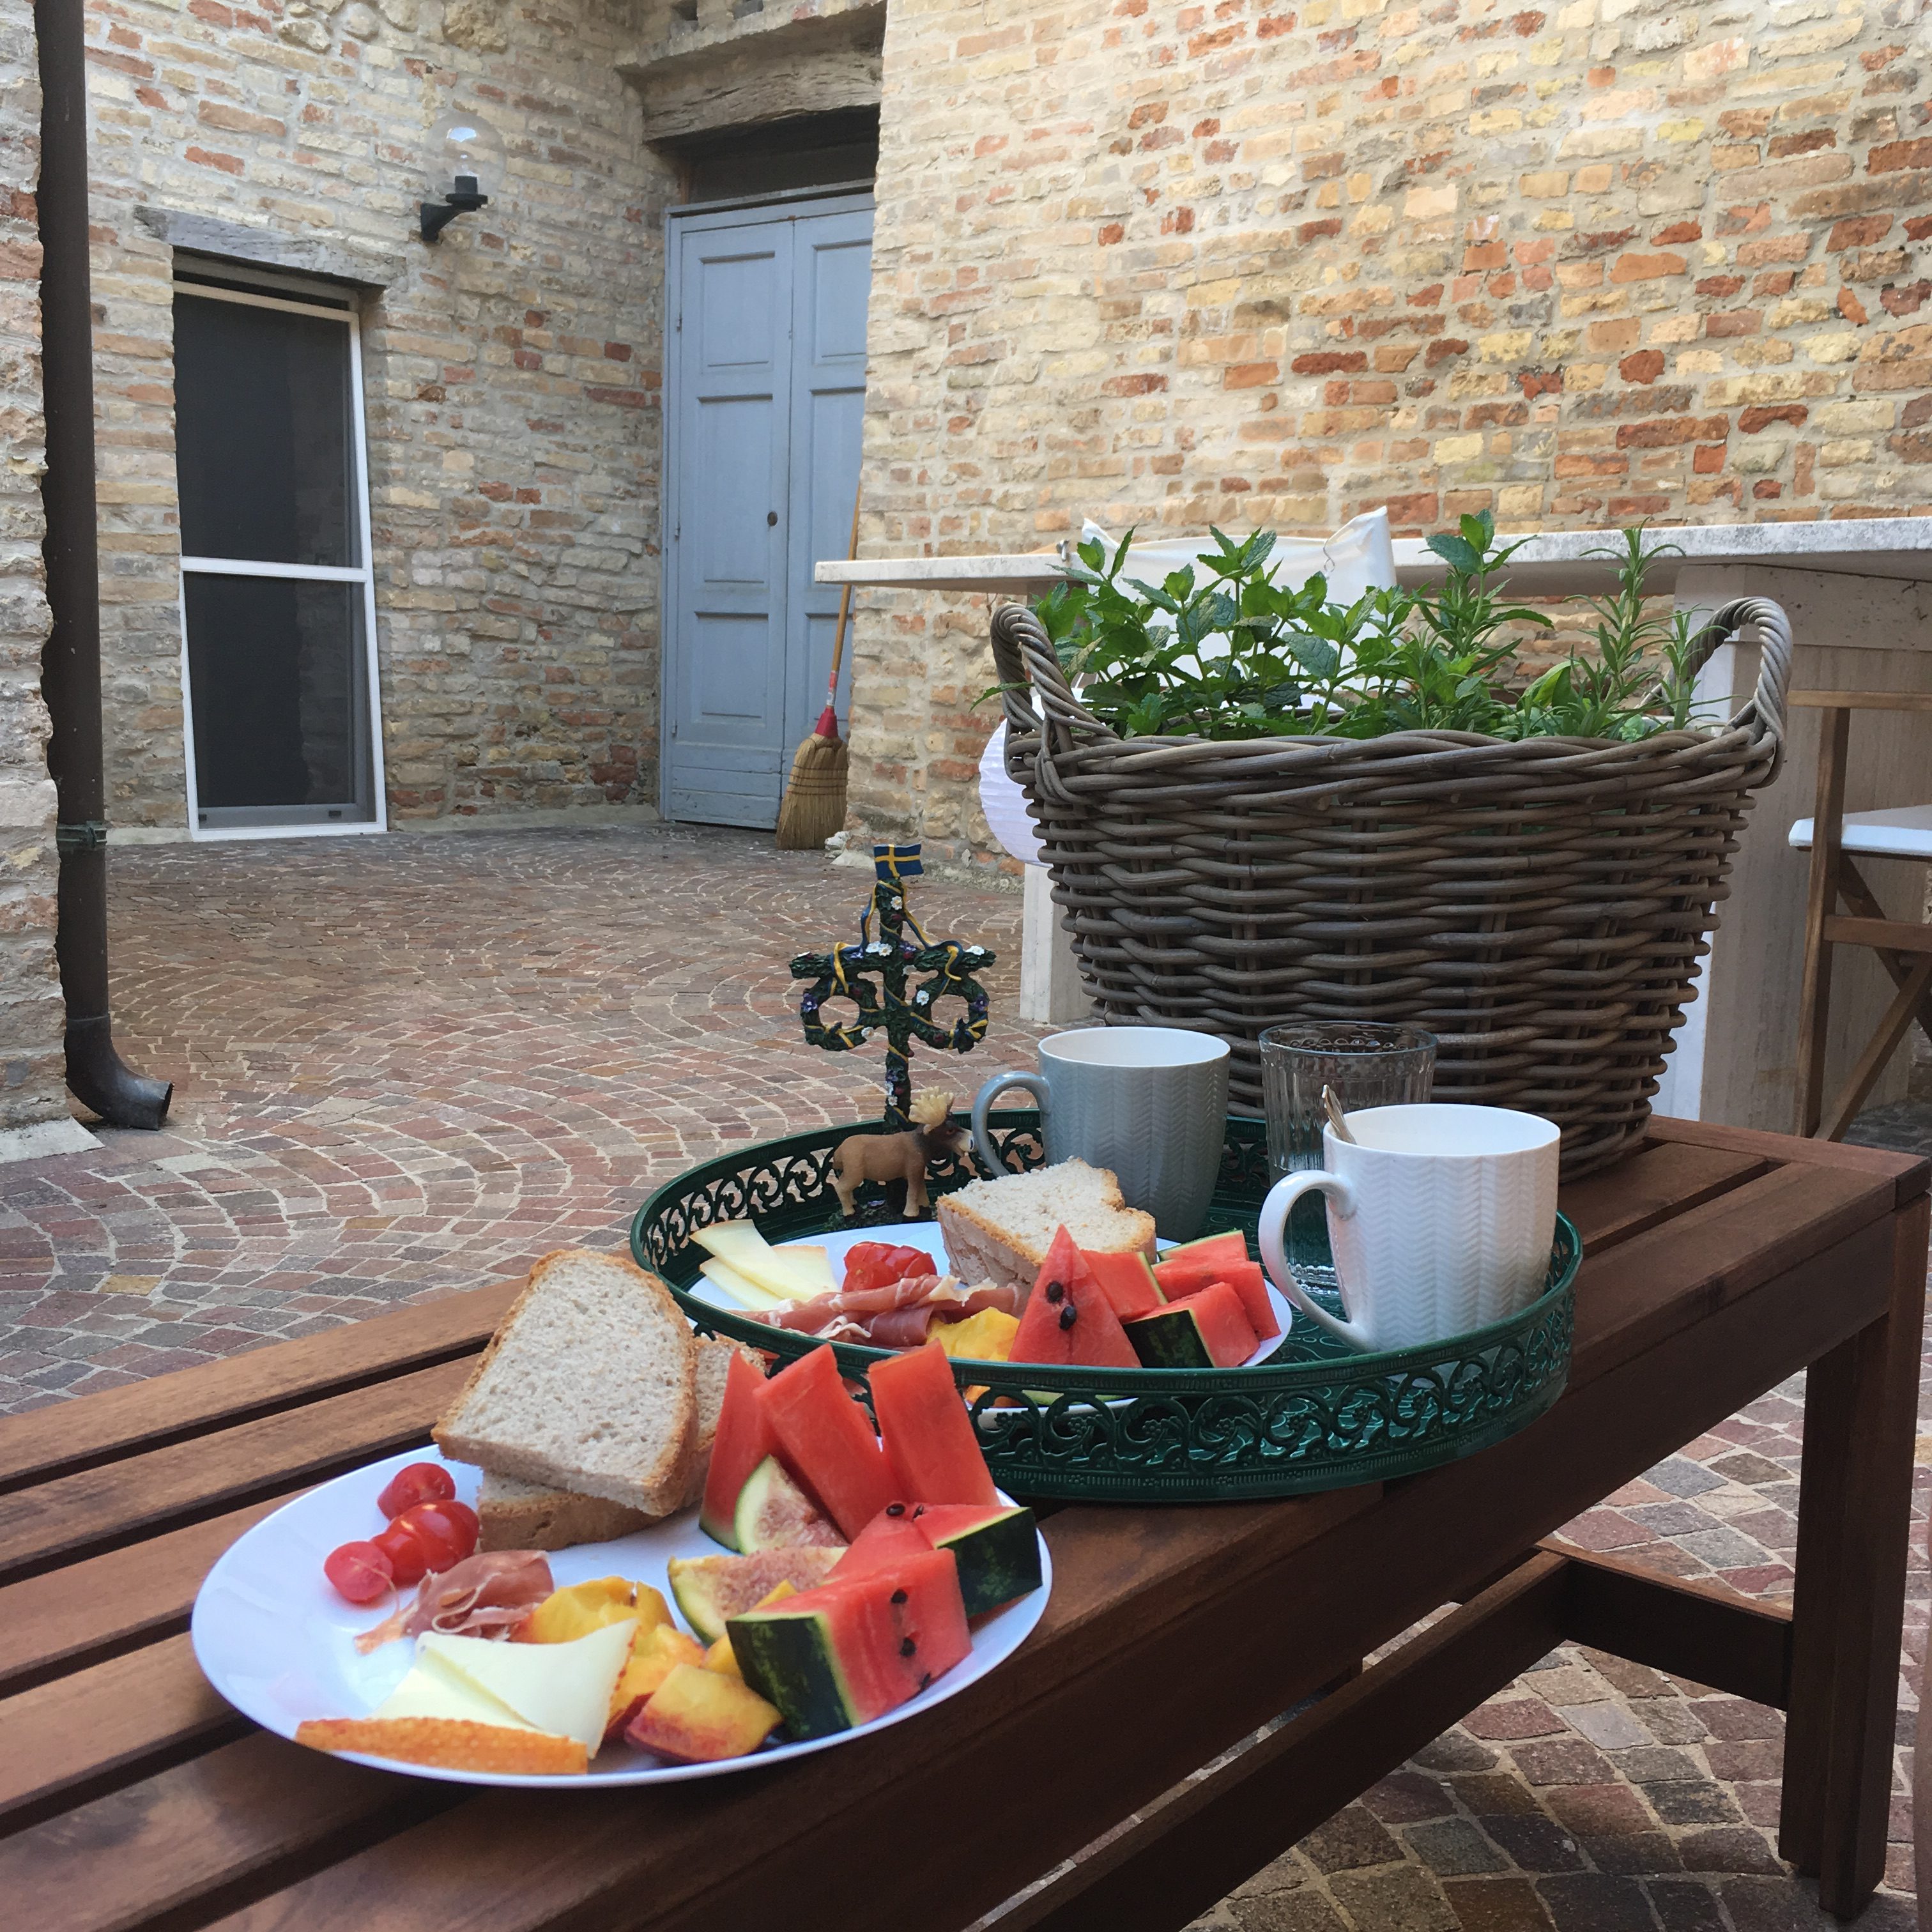 Midsummer breakfast in the courtyard